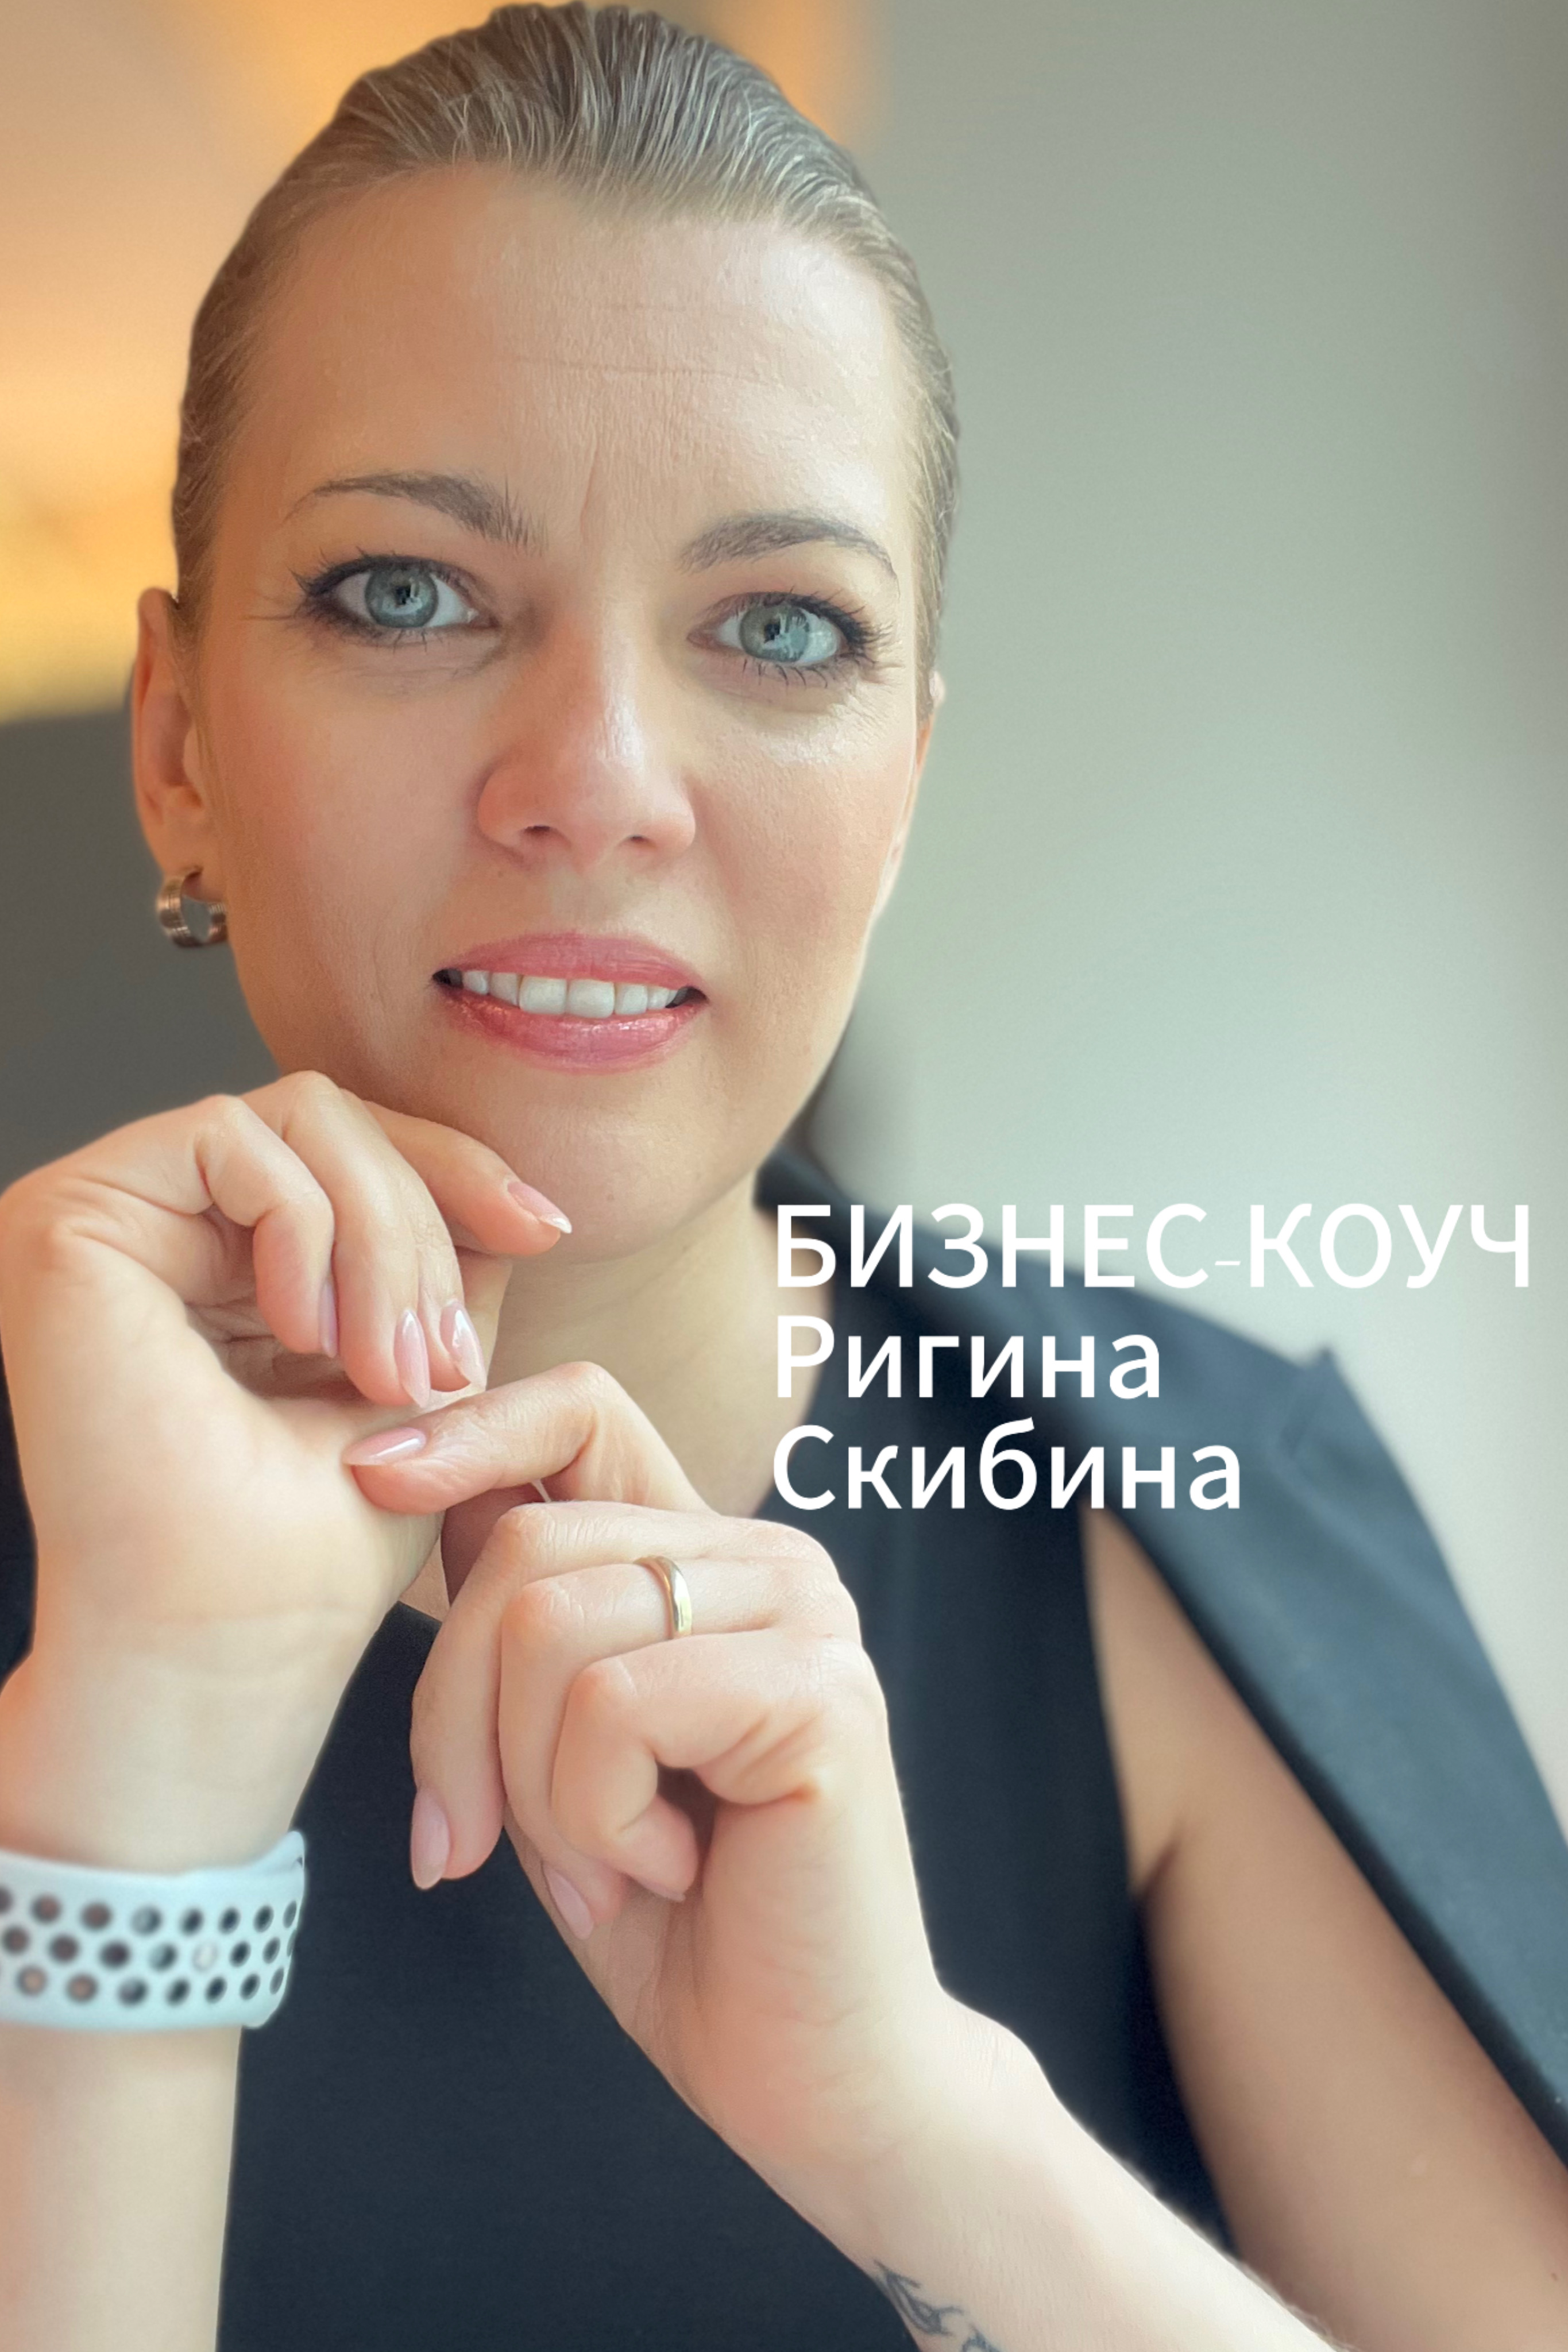 Ригина Скибина |Бизнес-коуч ICF| член ФПКиН